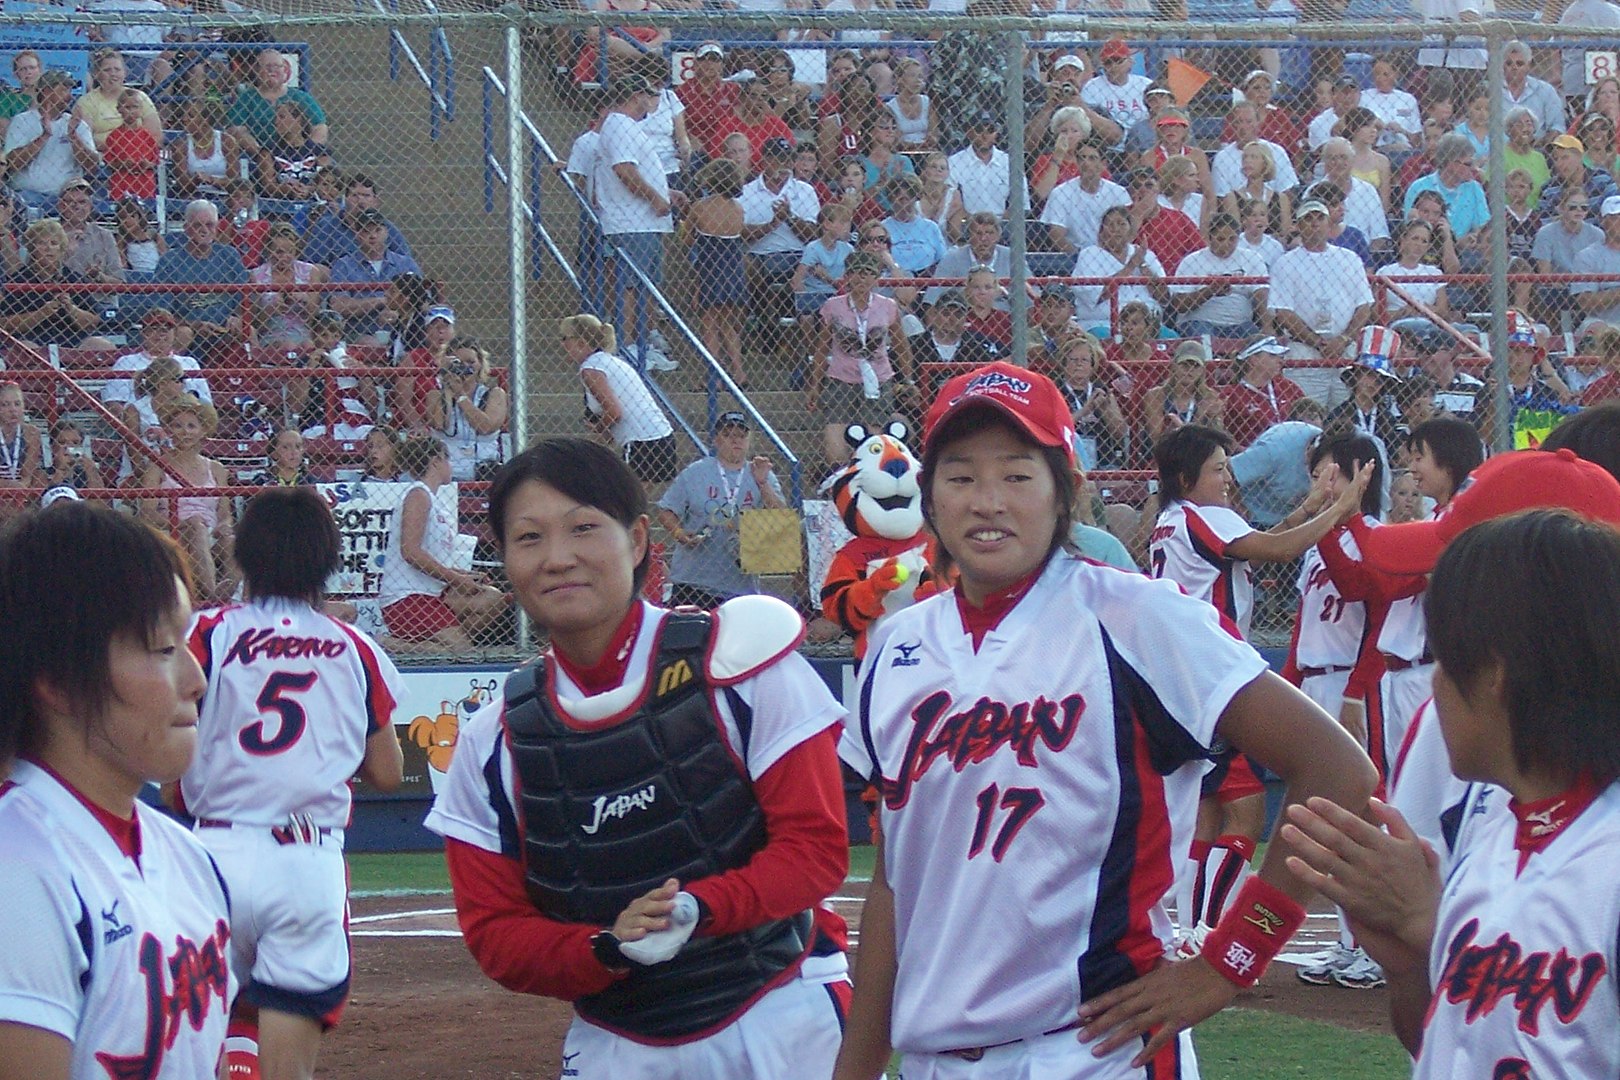 2006 World Cup of Softball Yukiko Ueno By Dan san okc - Own work